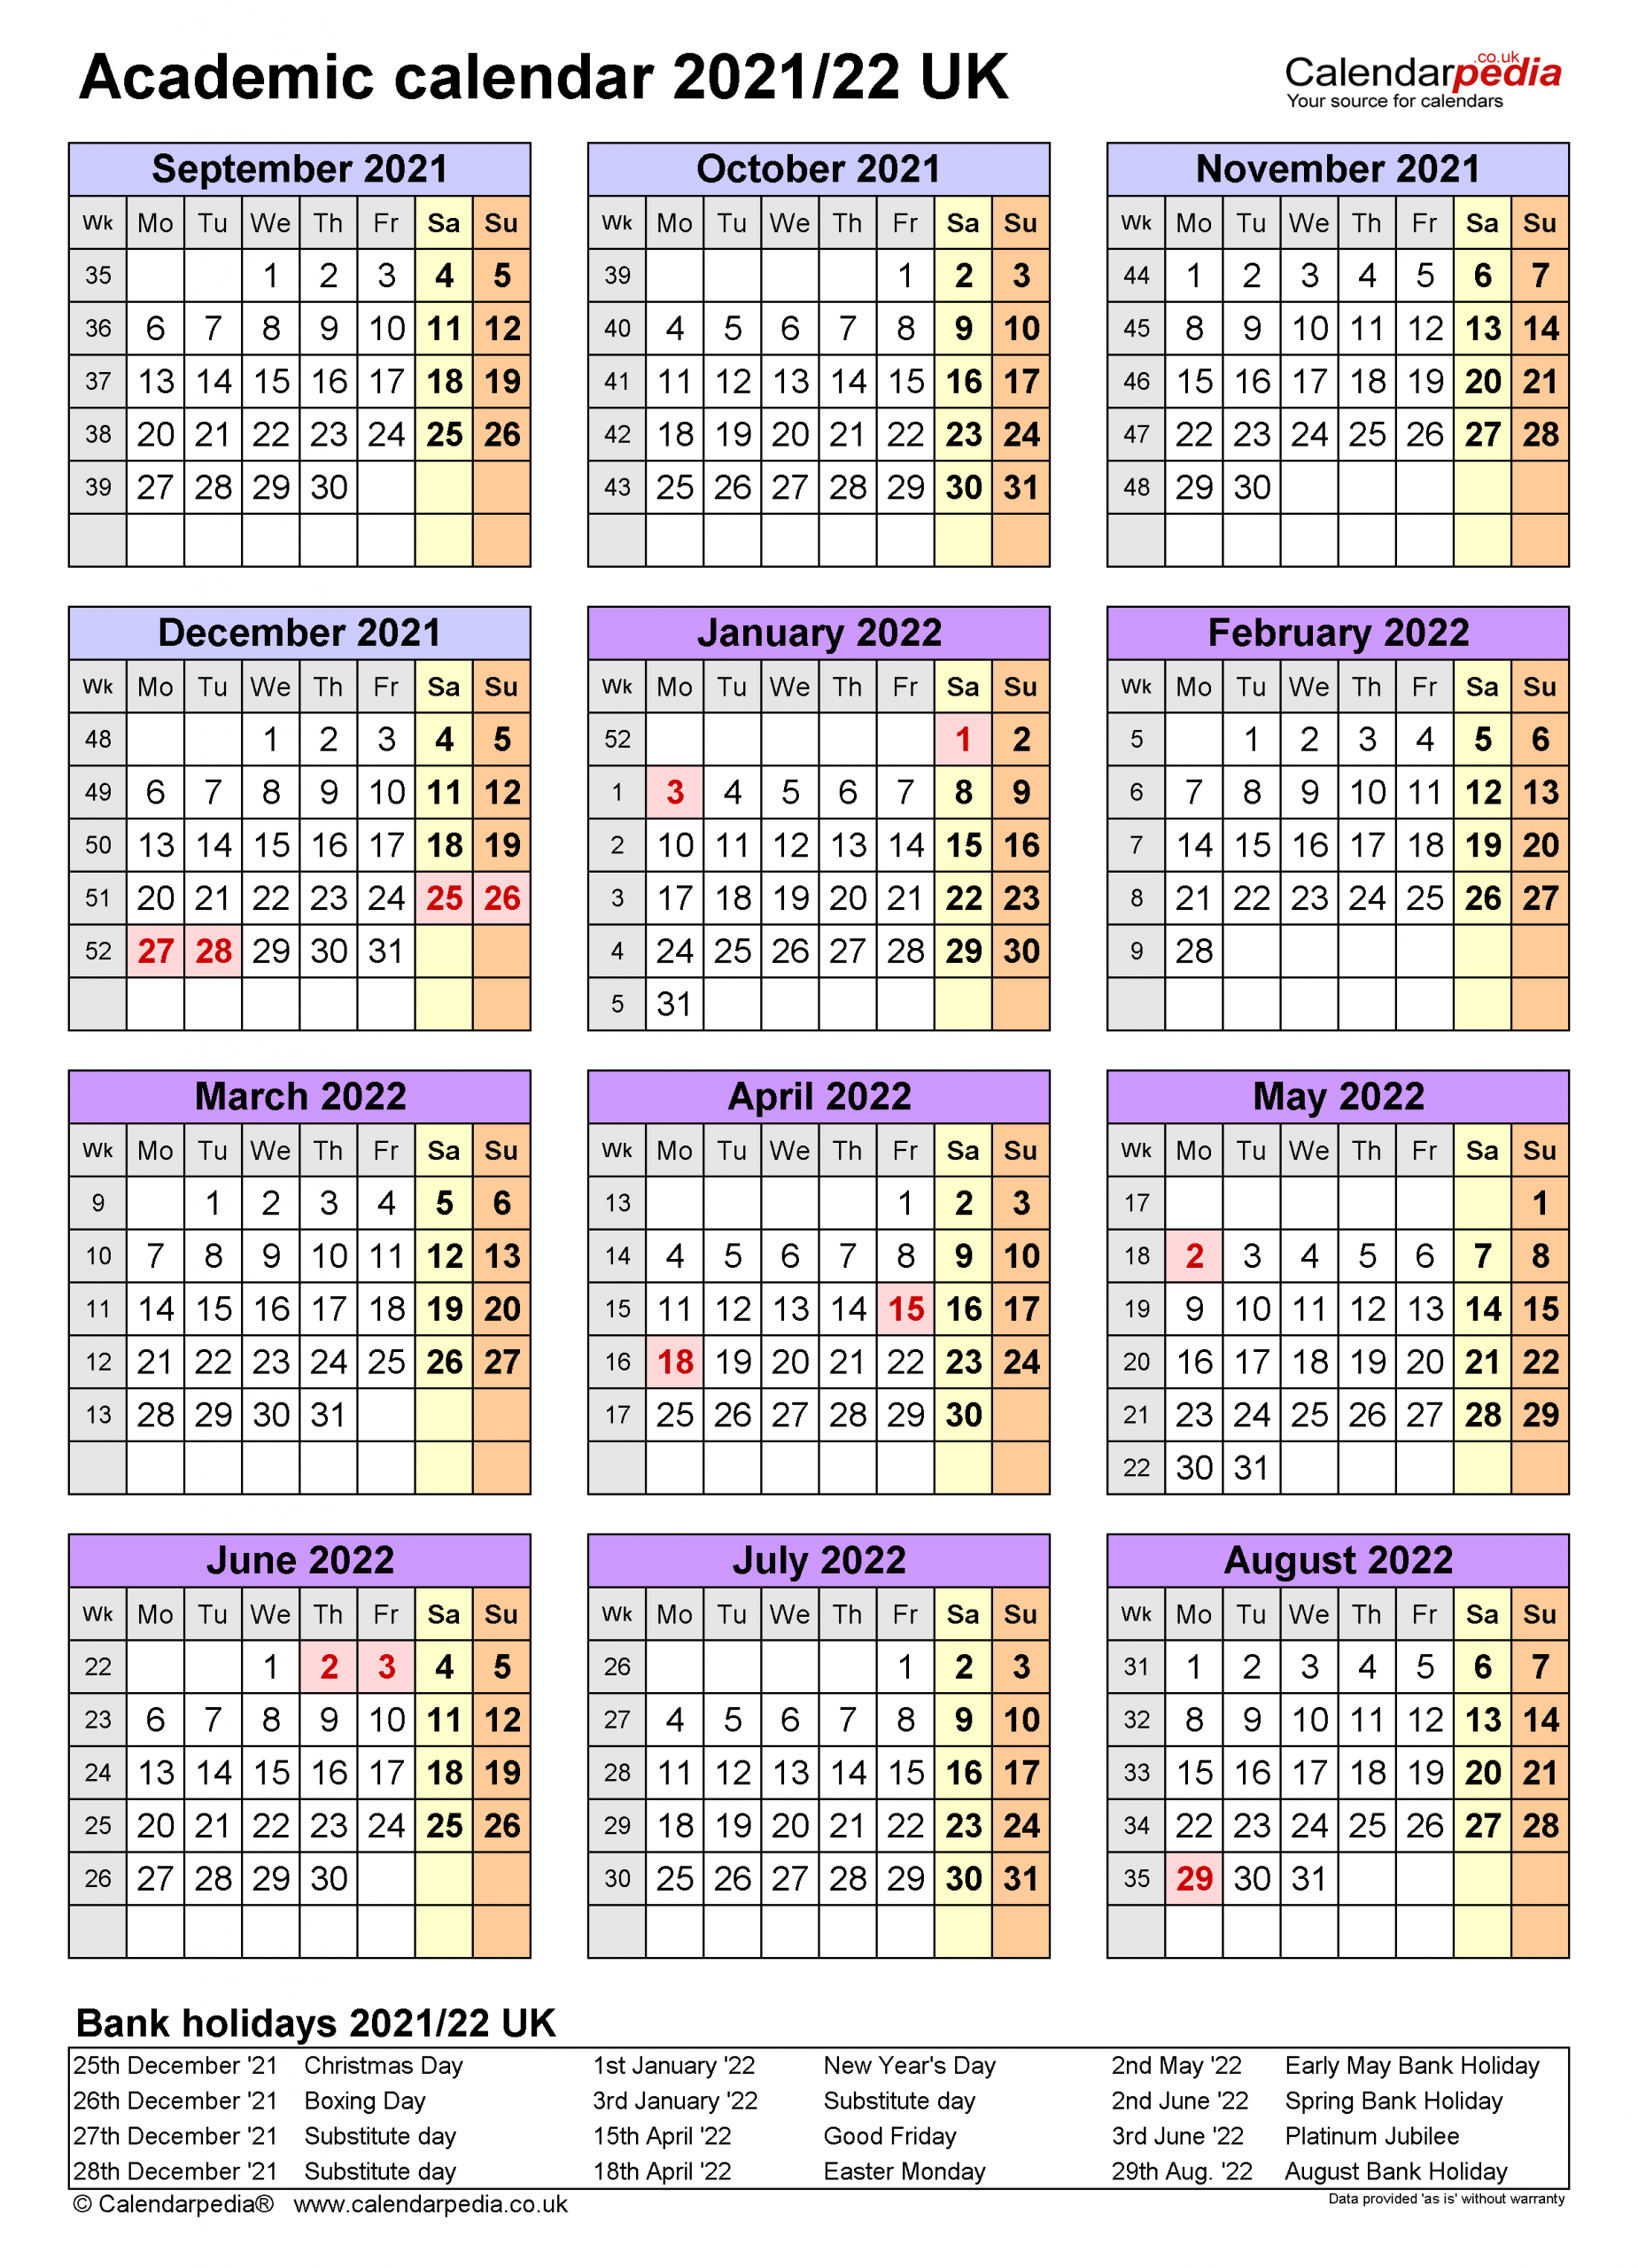 Academic Calendars 2021/22 Uk - Free Printable Excel Templates